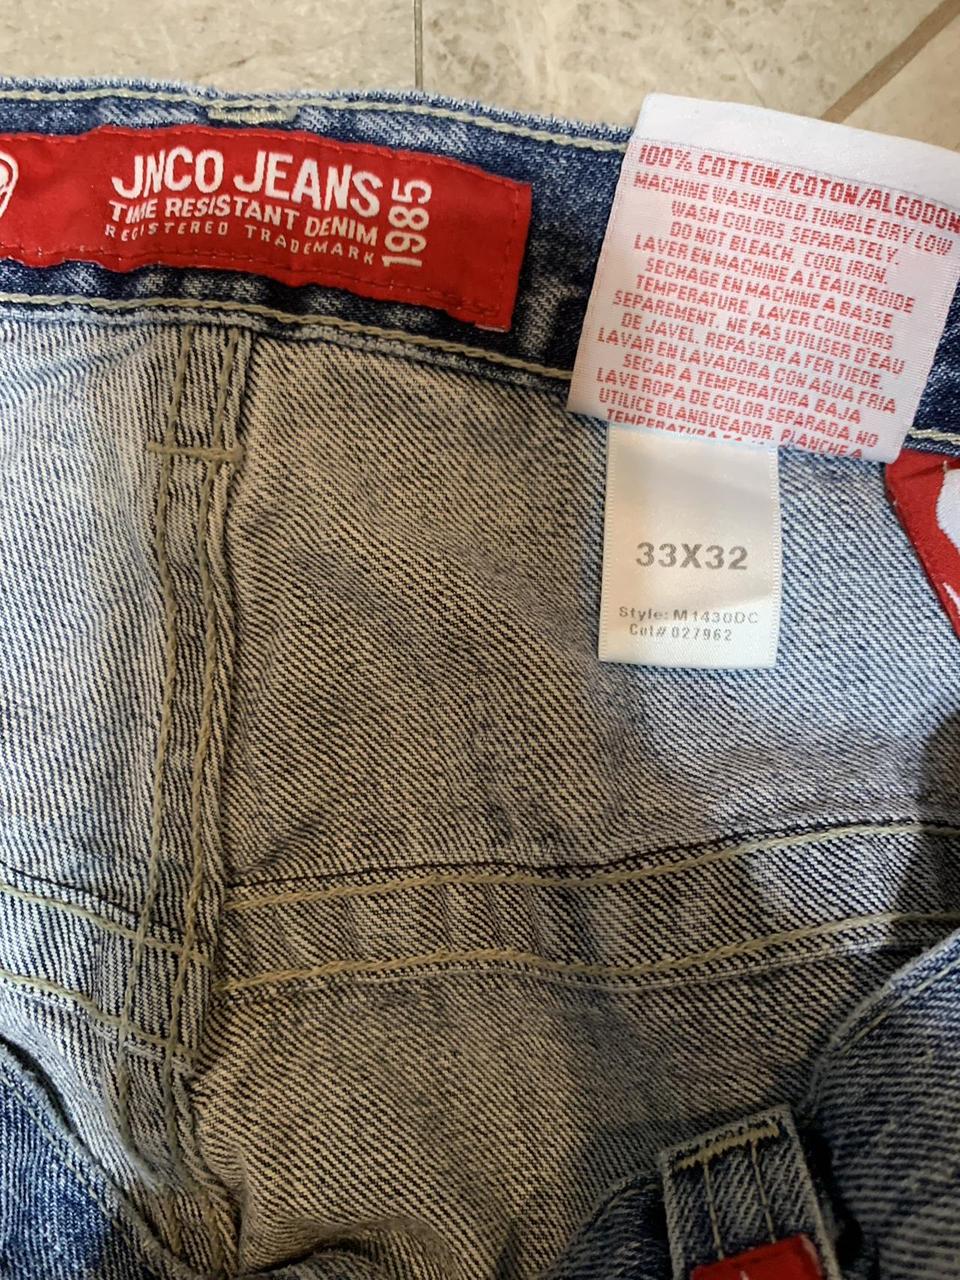 Jnco Jeans Tribal!!! Size: 33x32 No Heel drag ... - Depop